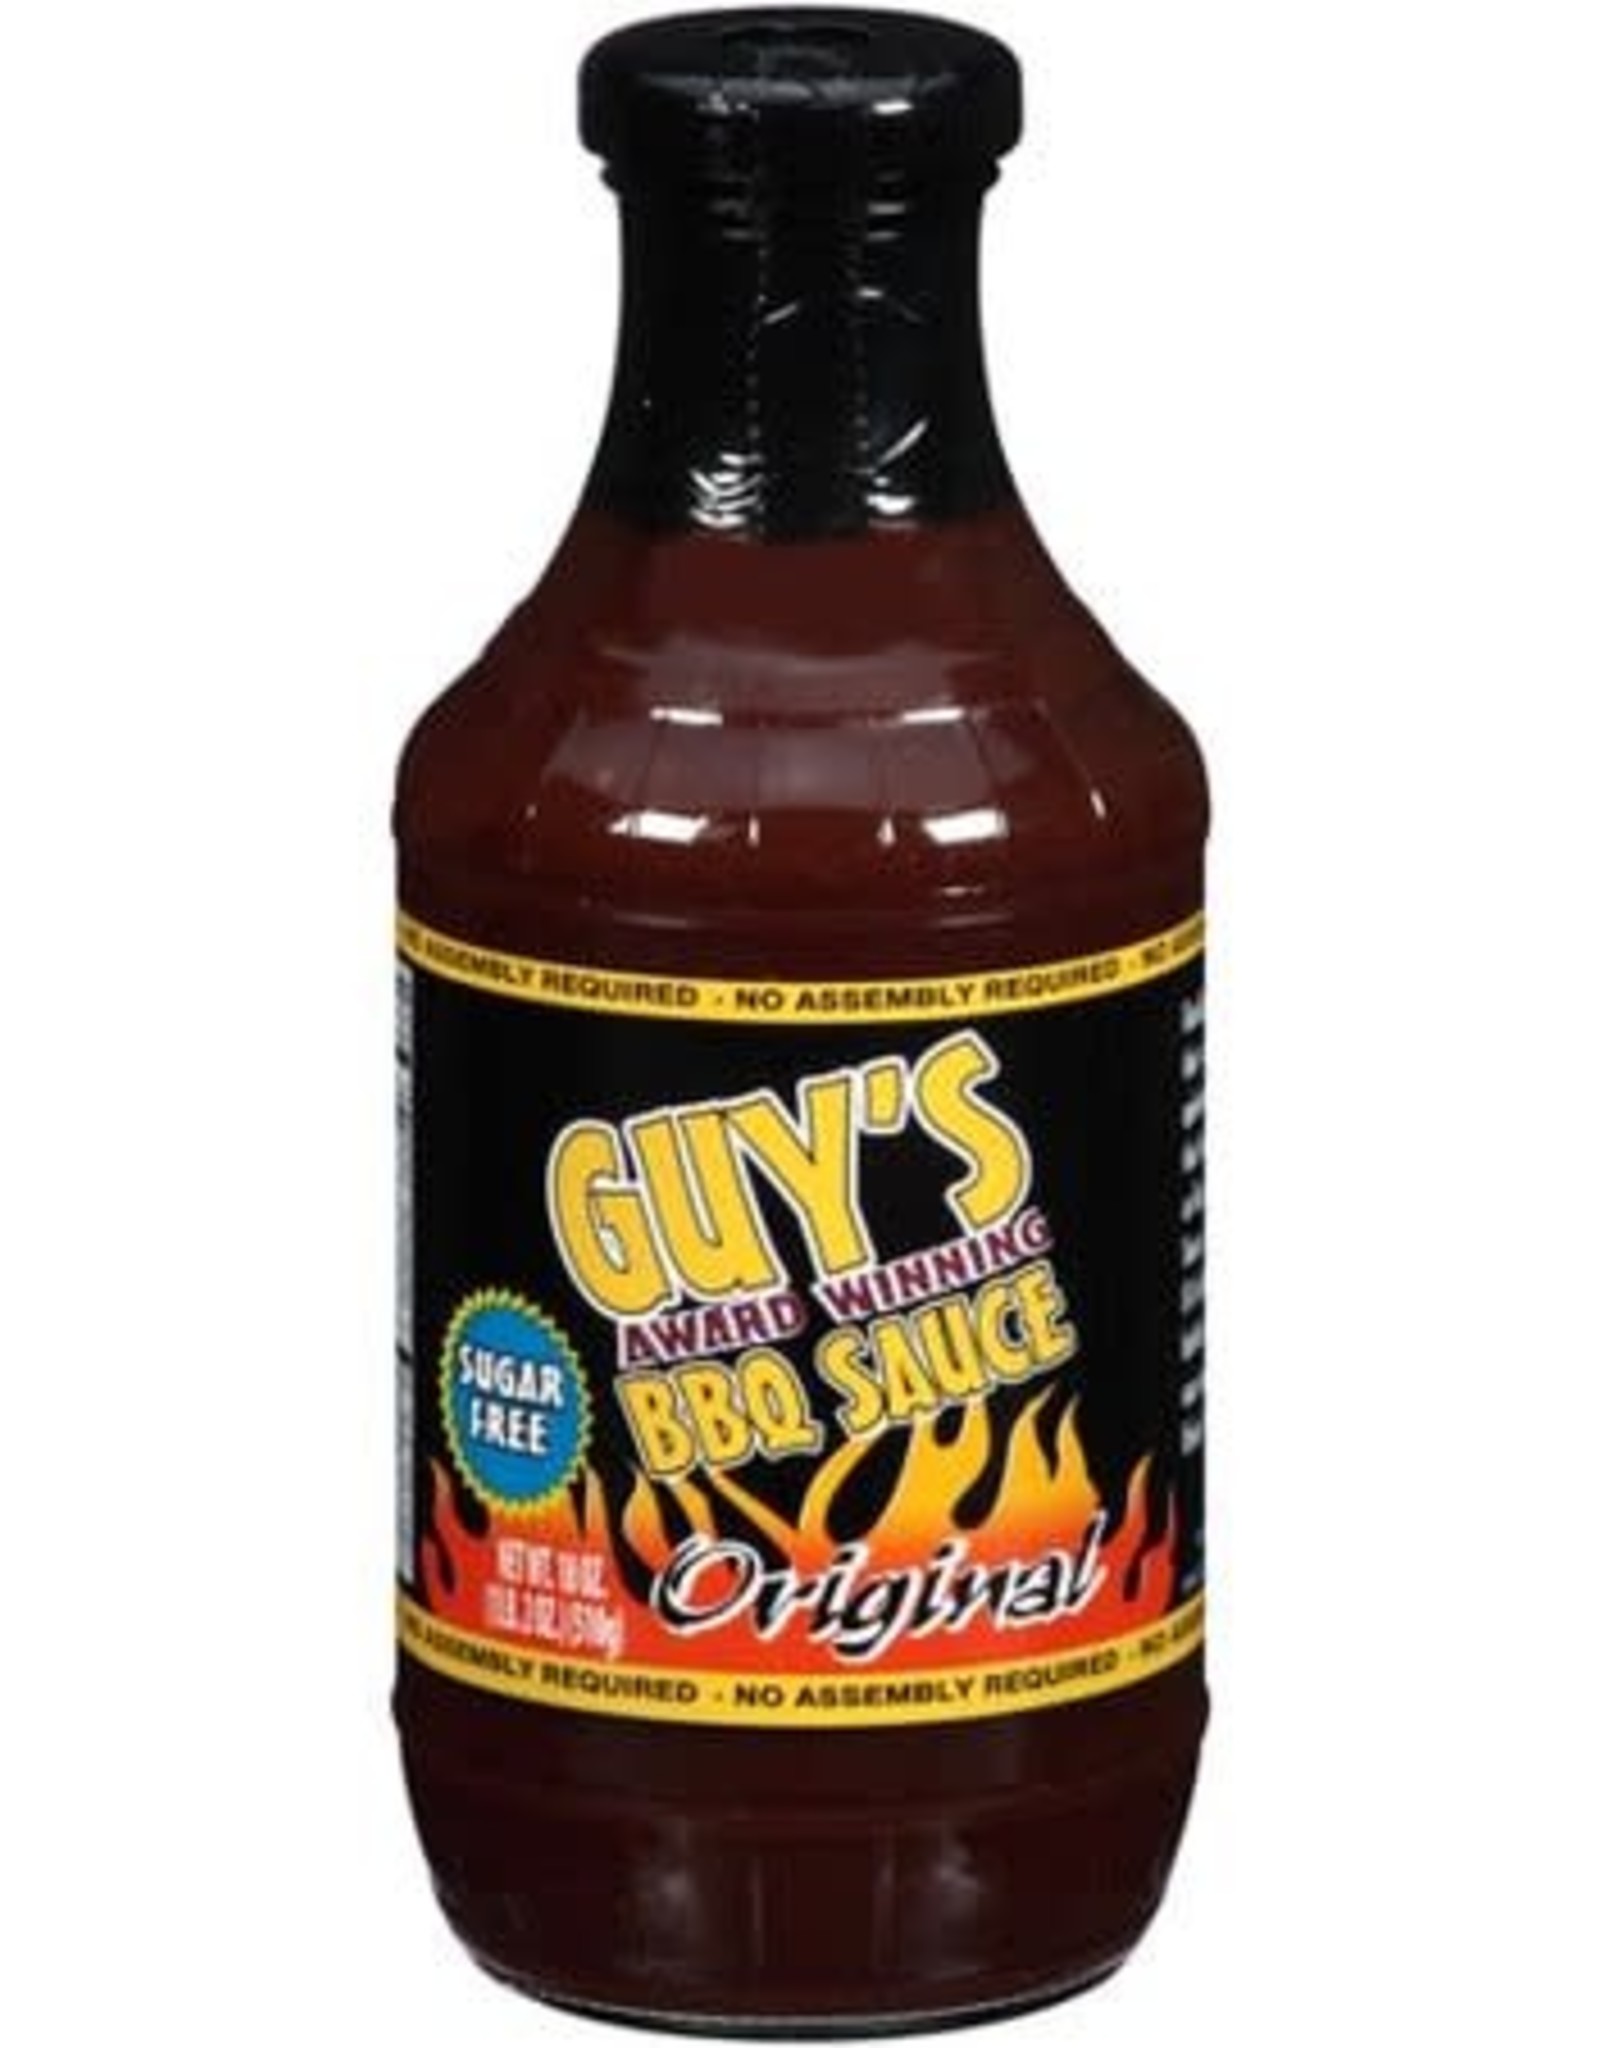 Guy's Sauces Guy's BBQ Original Sauce